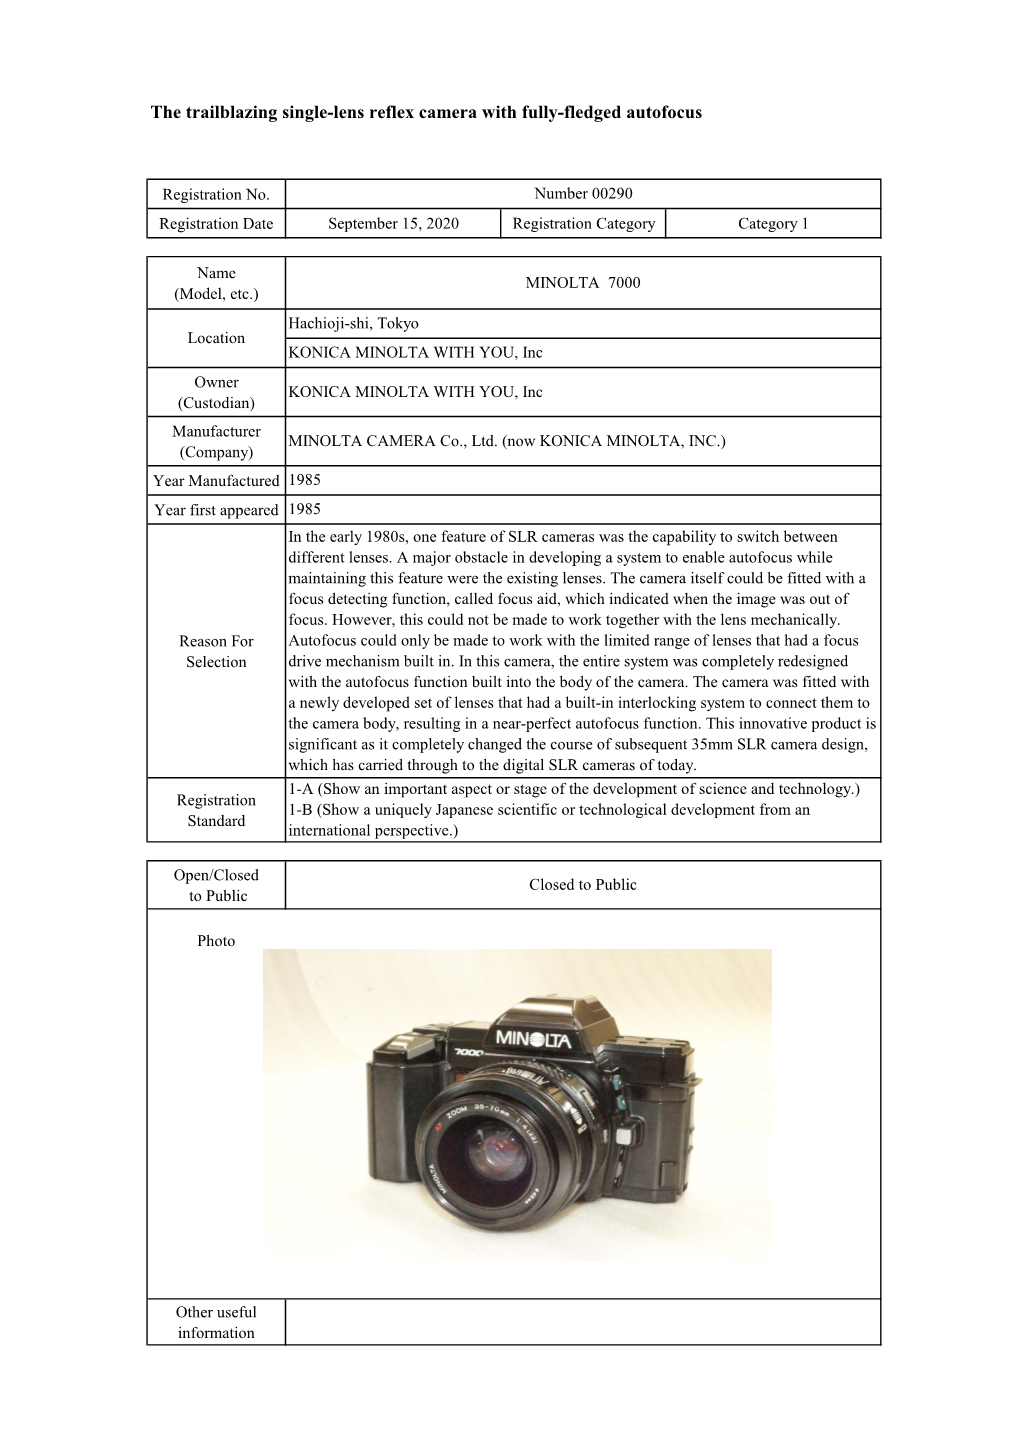 The Trailblazing Single-Lens Reflex Camera with Fully-Fledged Autofocus